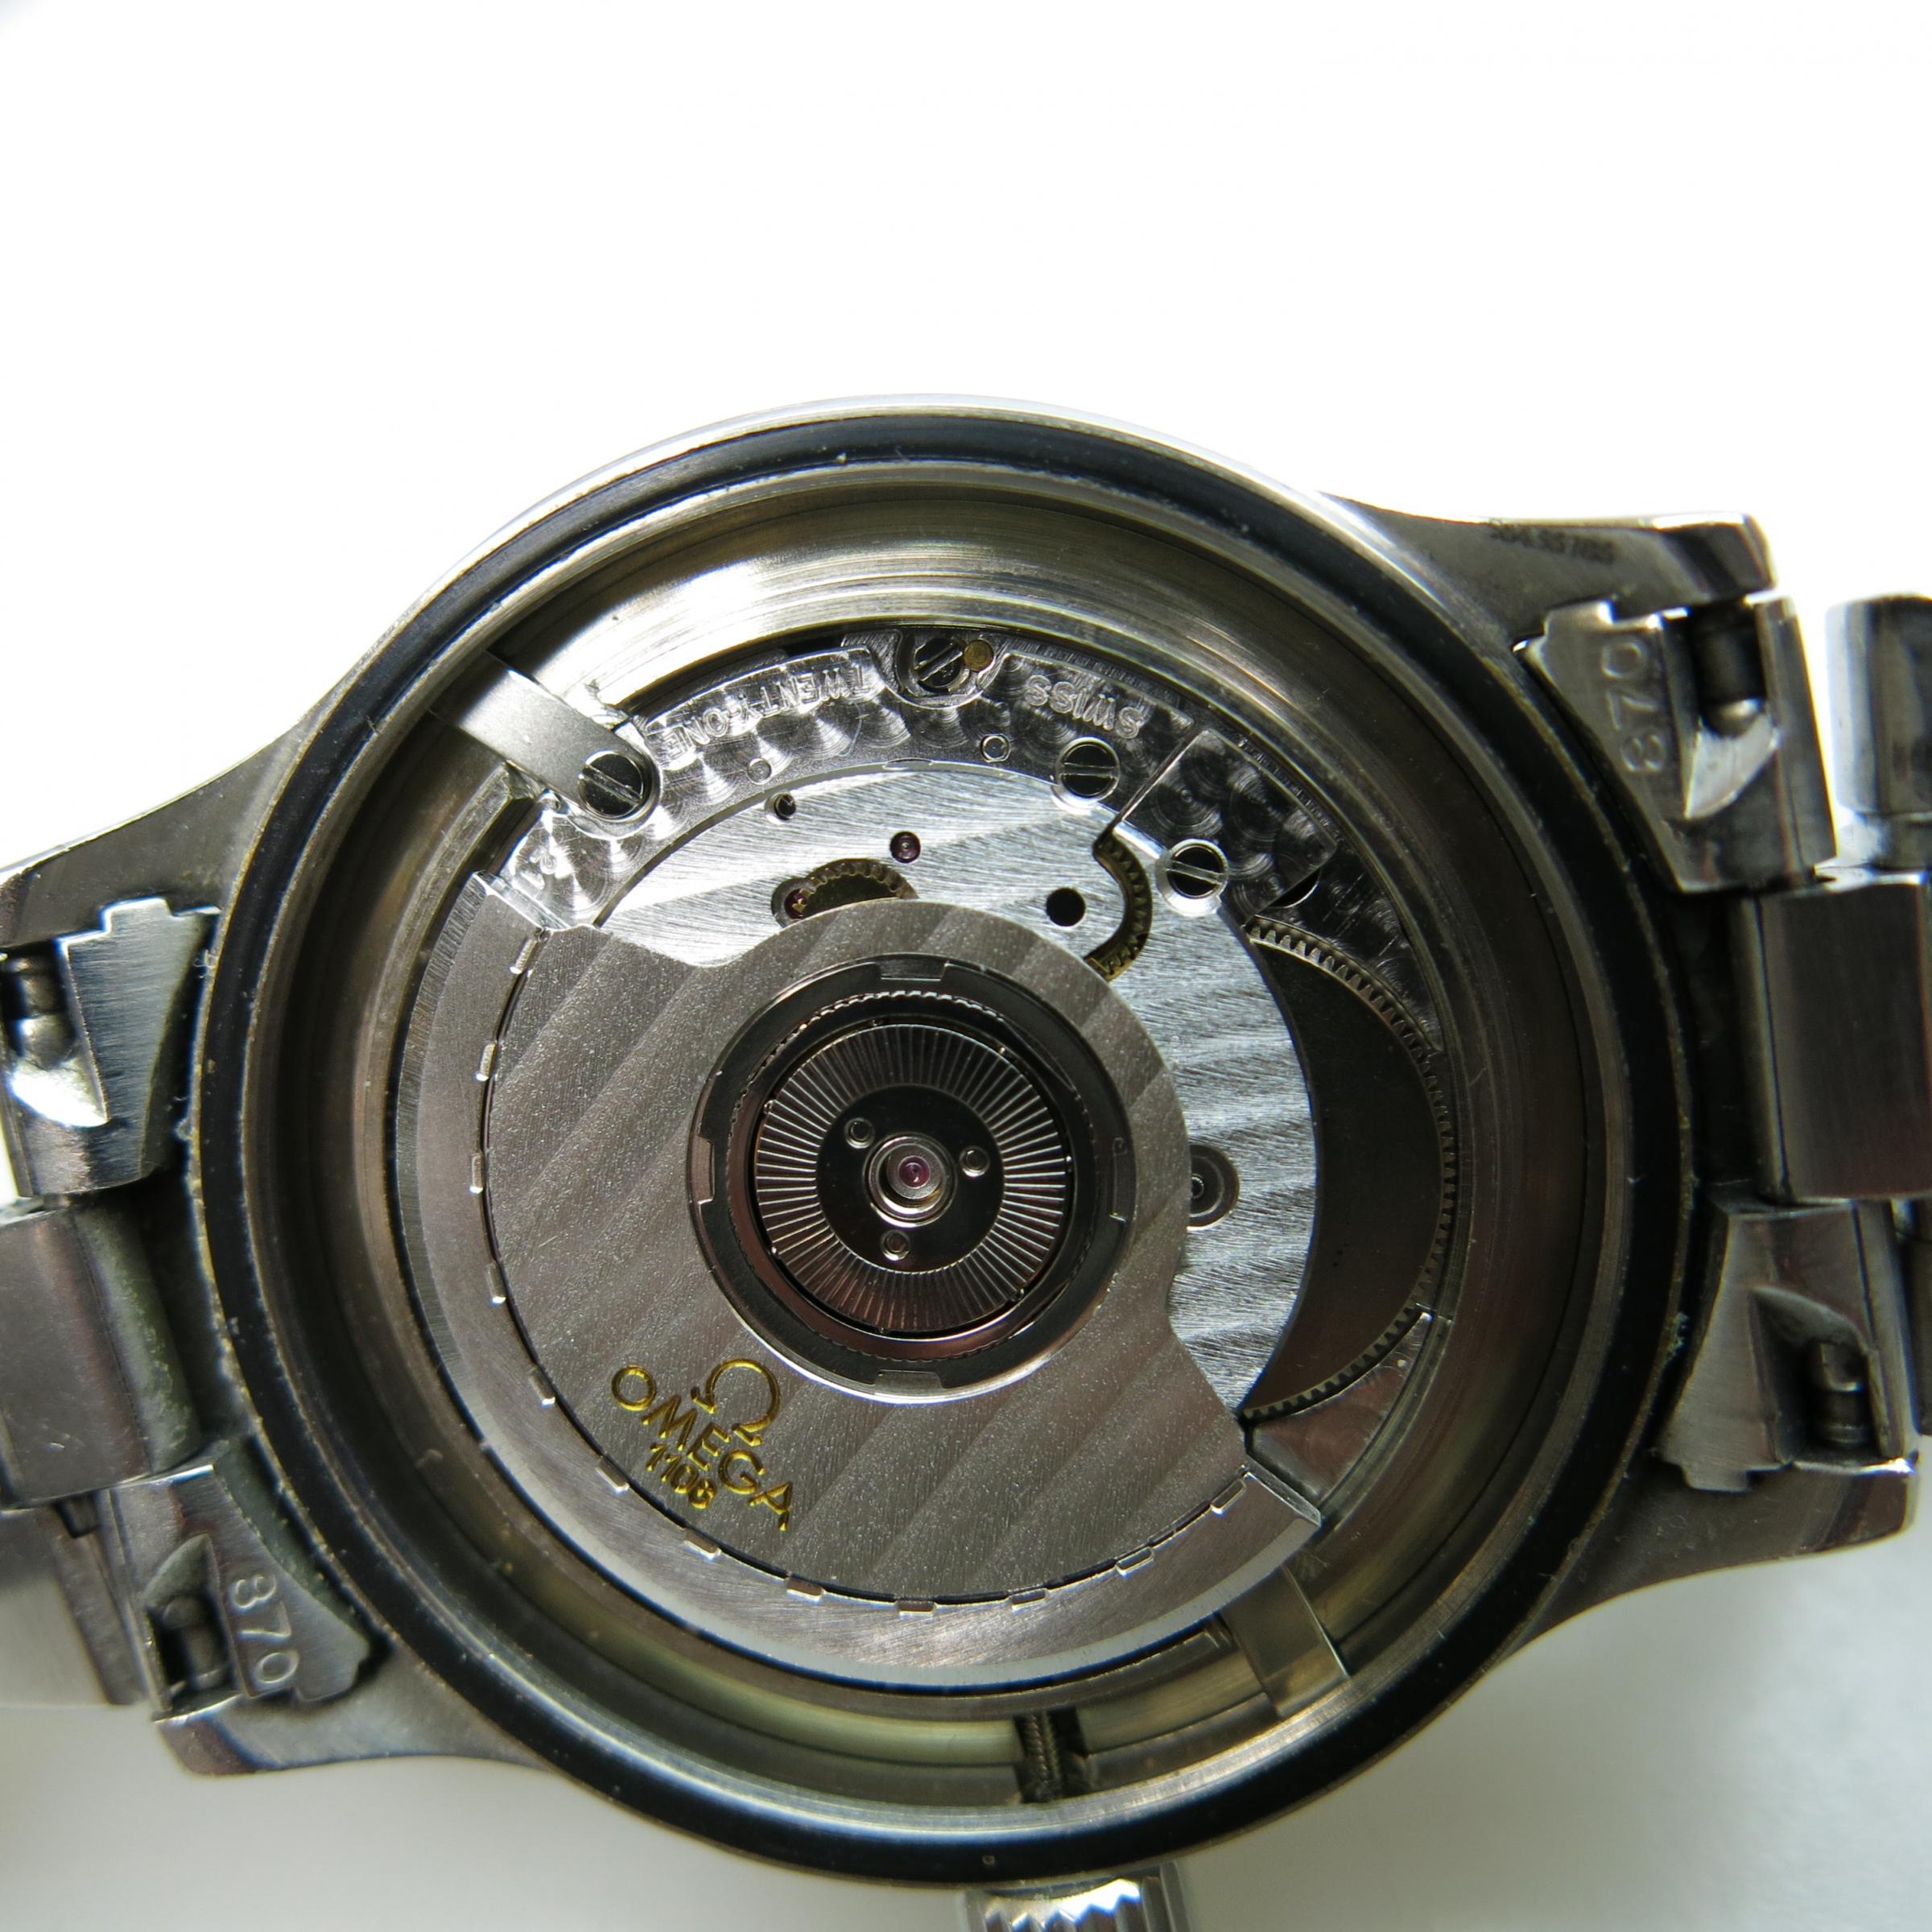 Omega 'Dynamic' Wristwatch With Date